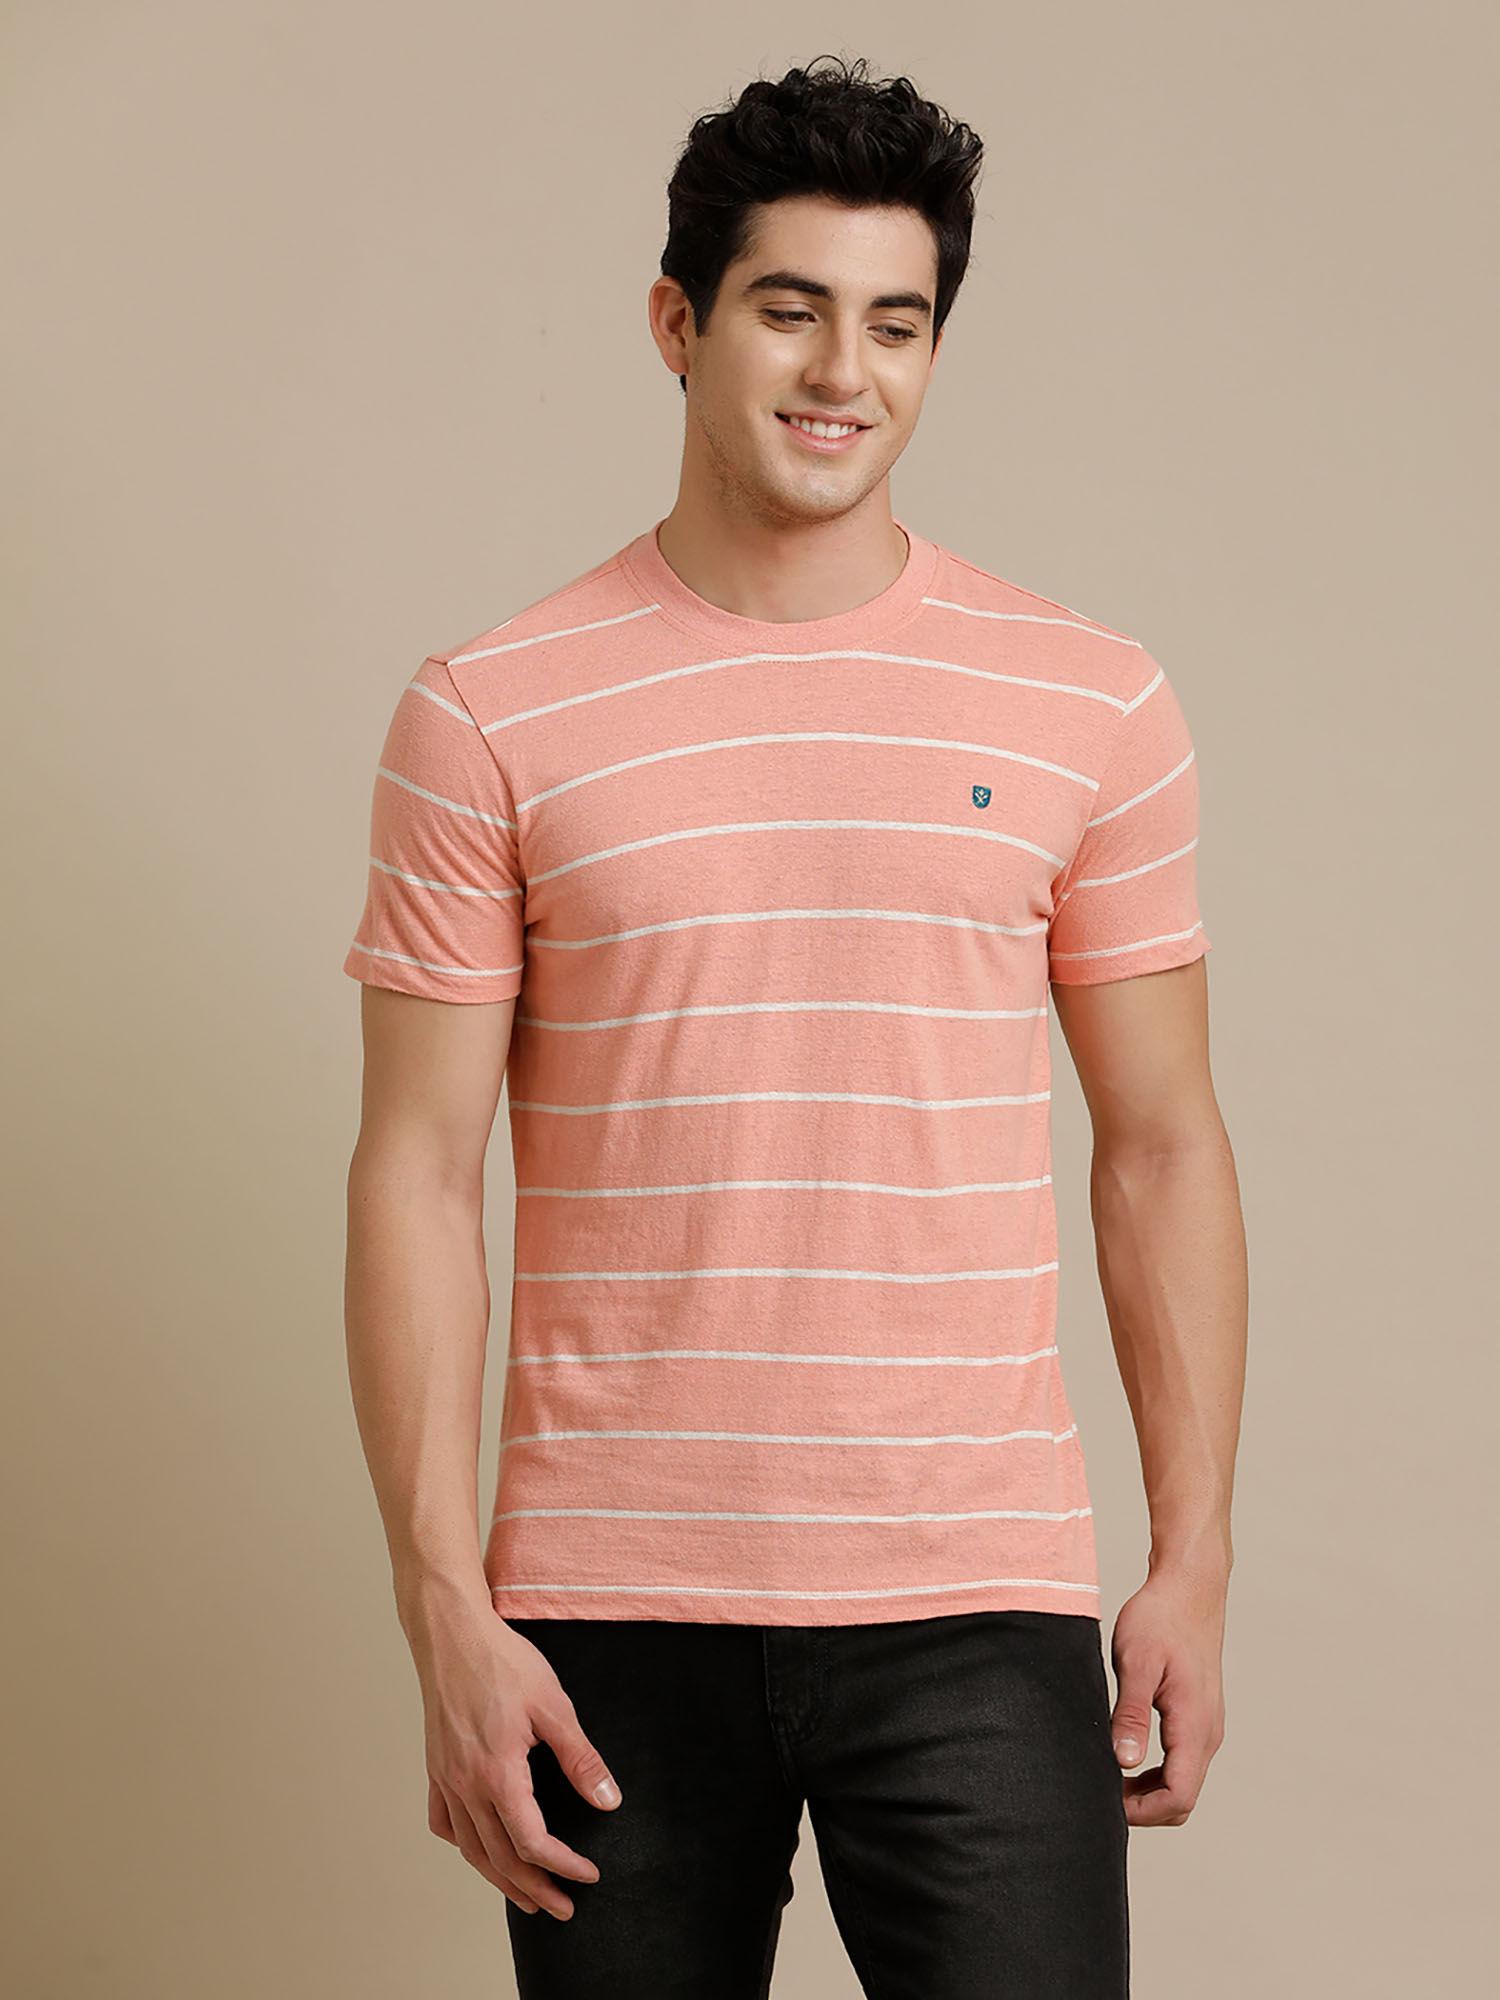 circular knit crew neck pink striped half sleeve t-shirt for men